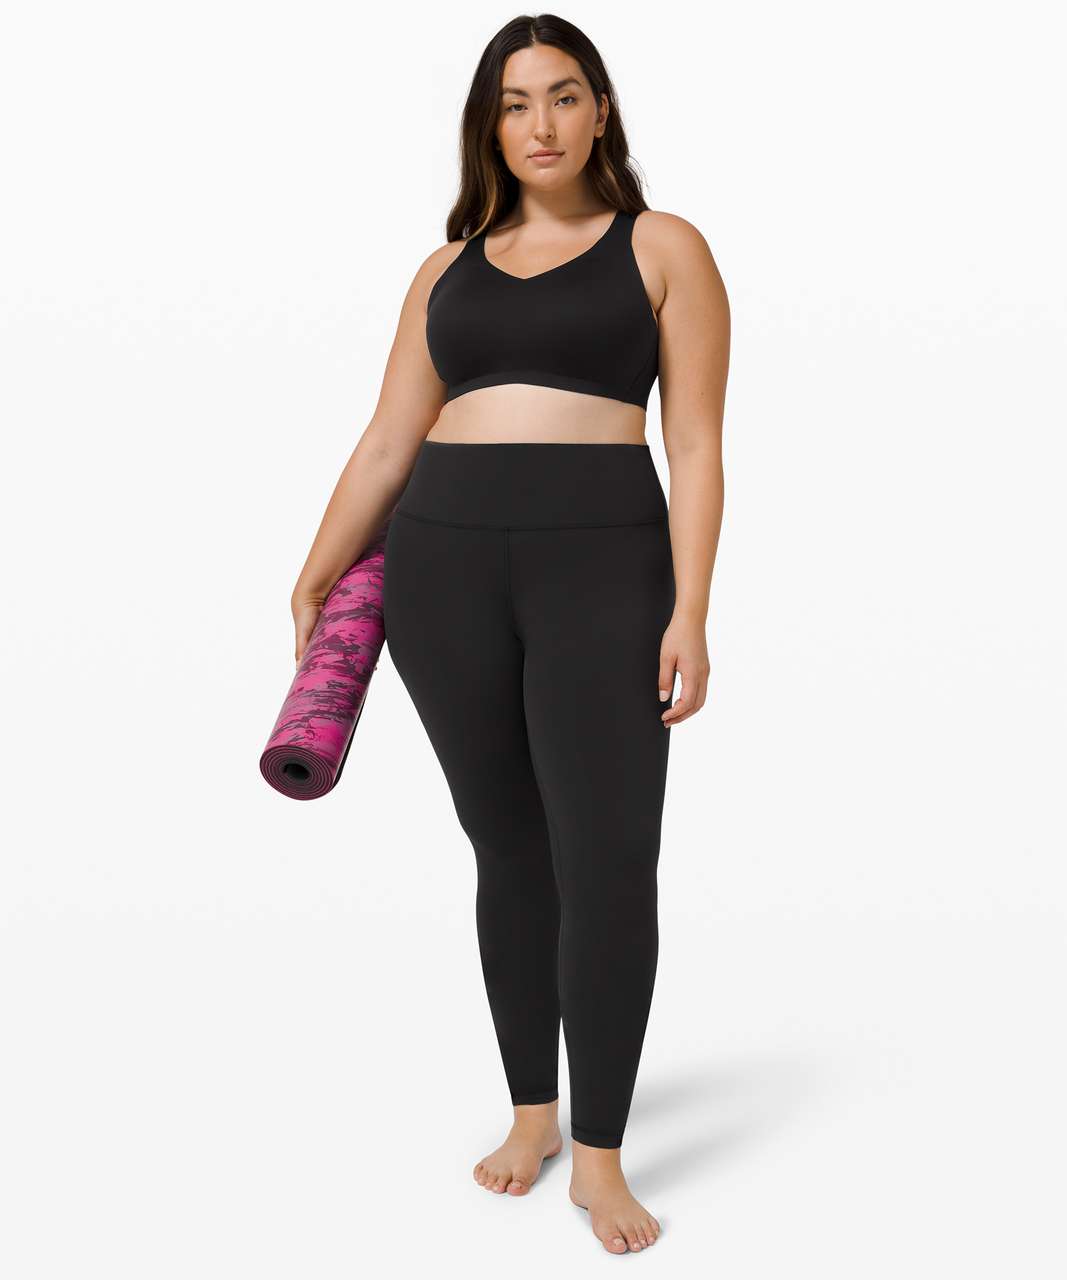 Lululemon yoga pants Black Size 8 - $43 (56% Off Retail) - From